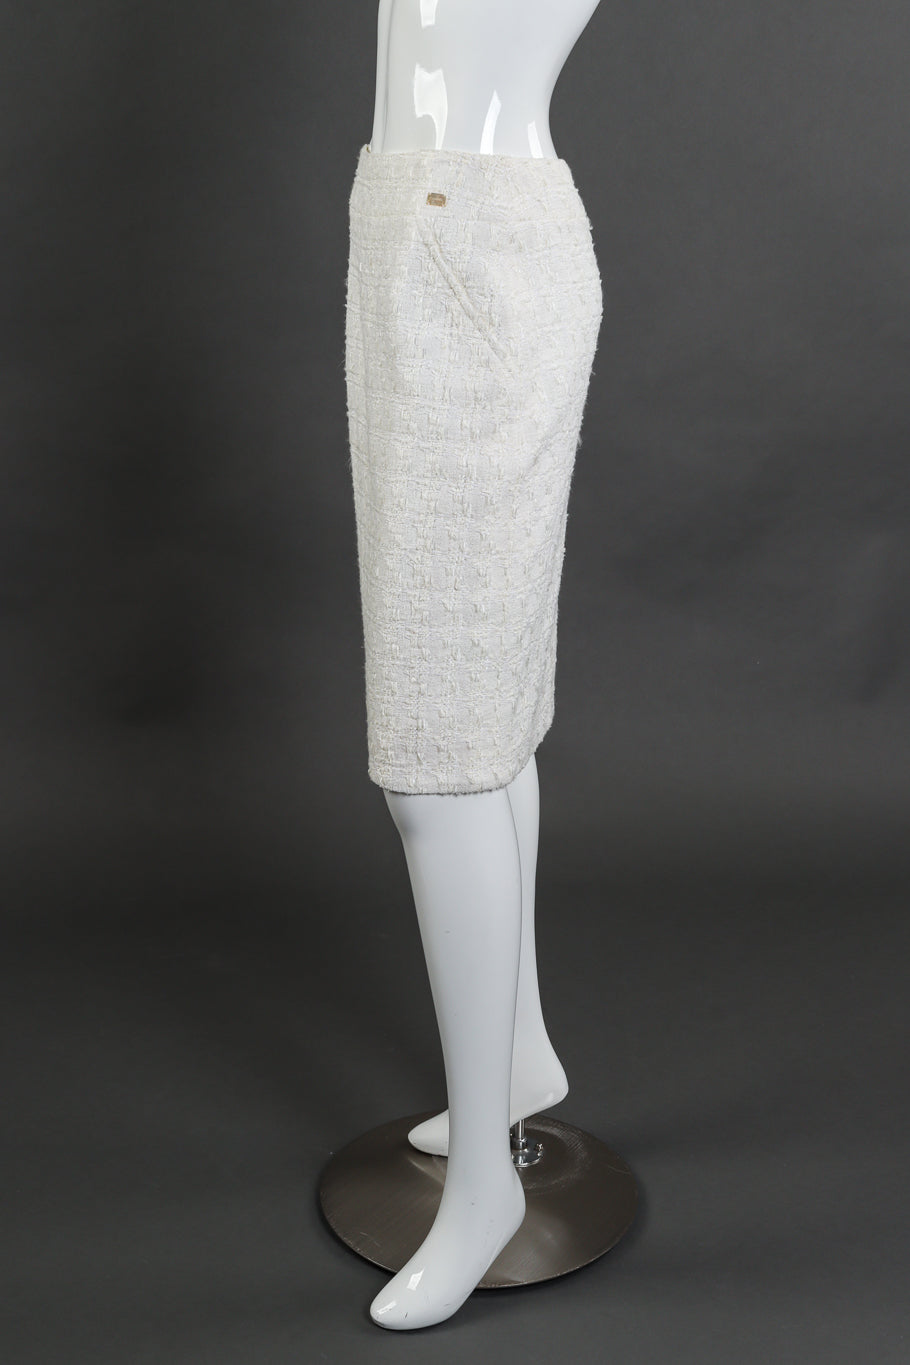 Vintage Chanel 2005 Cruise Woven Skirt Suit skirt side on mannequin @recessla